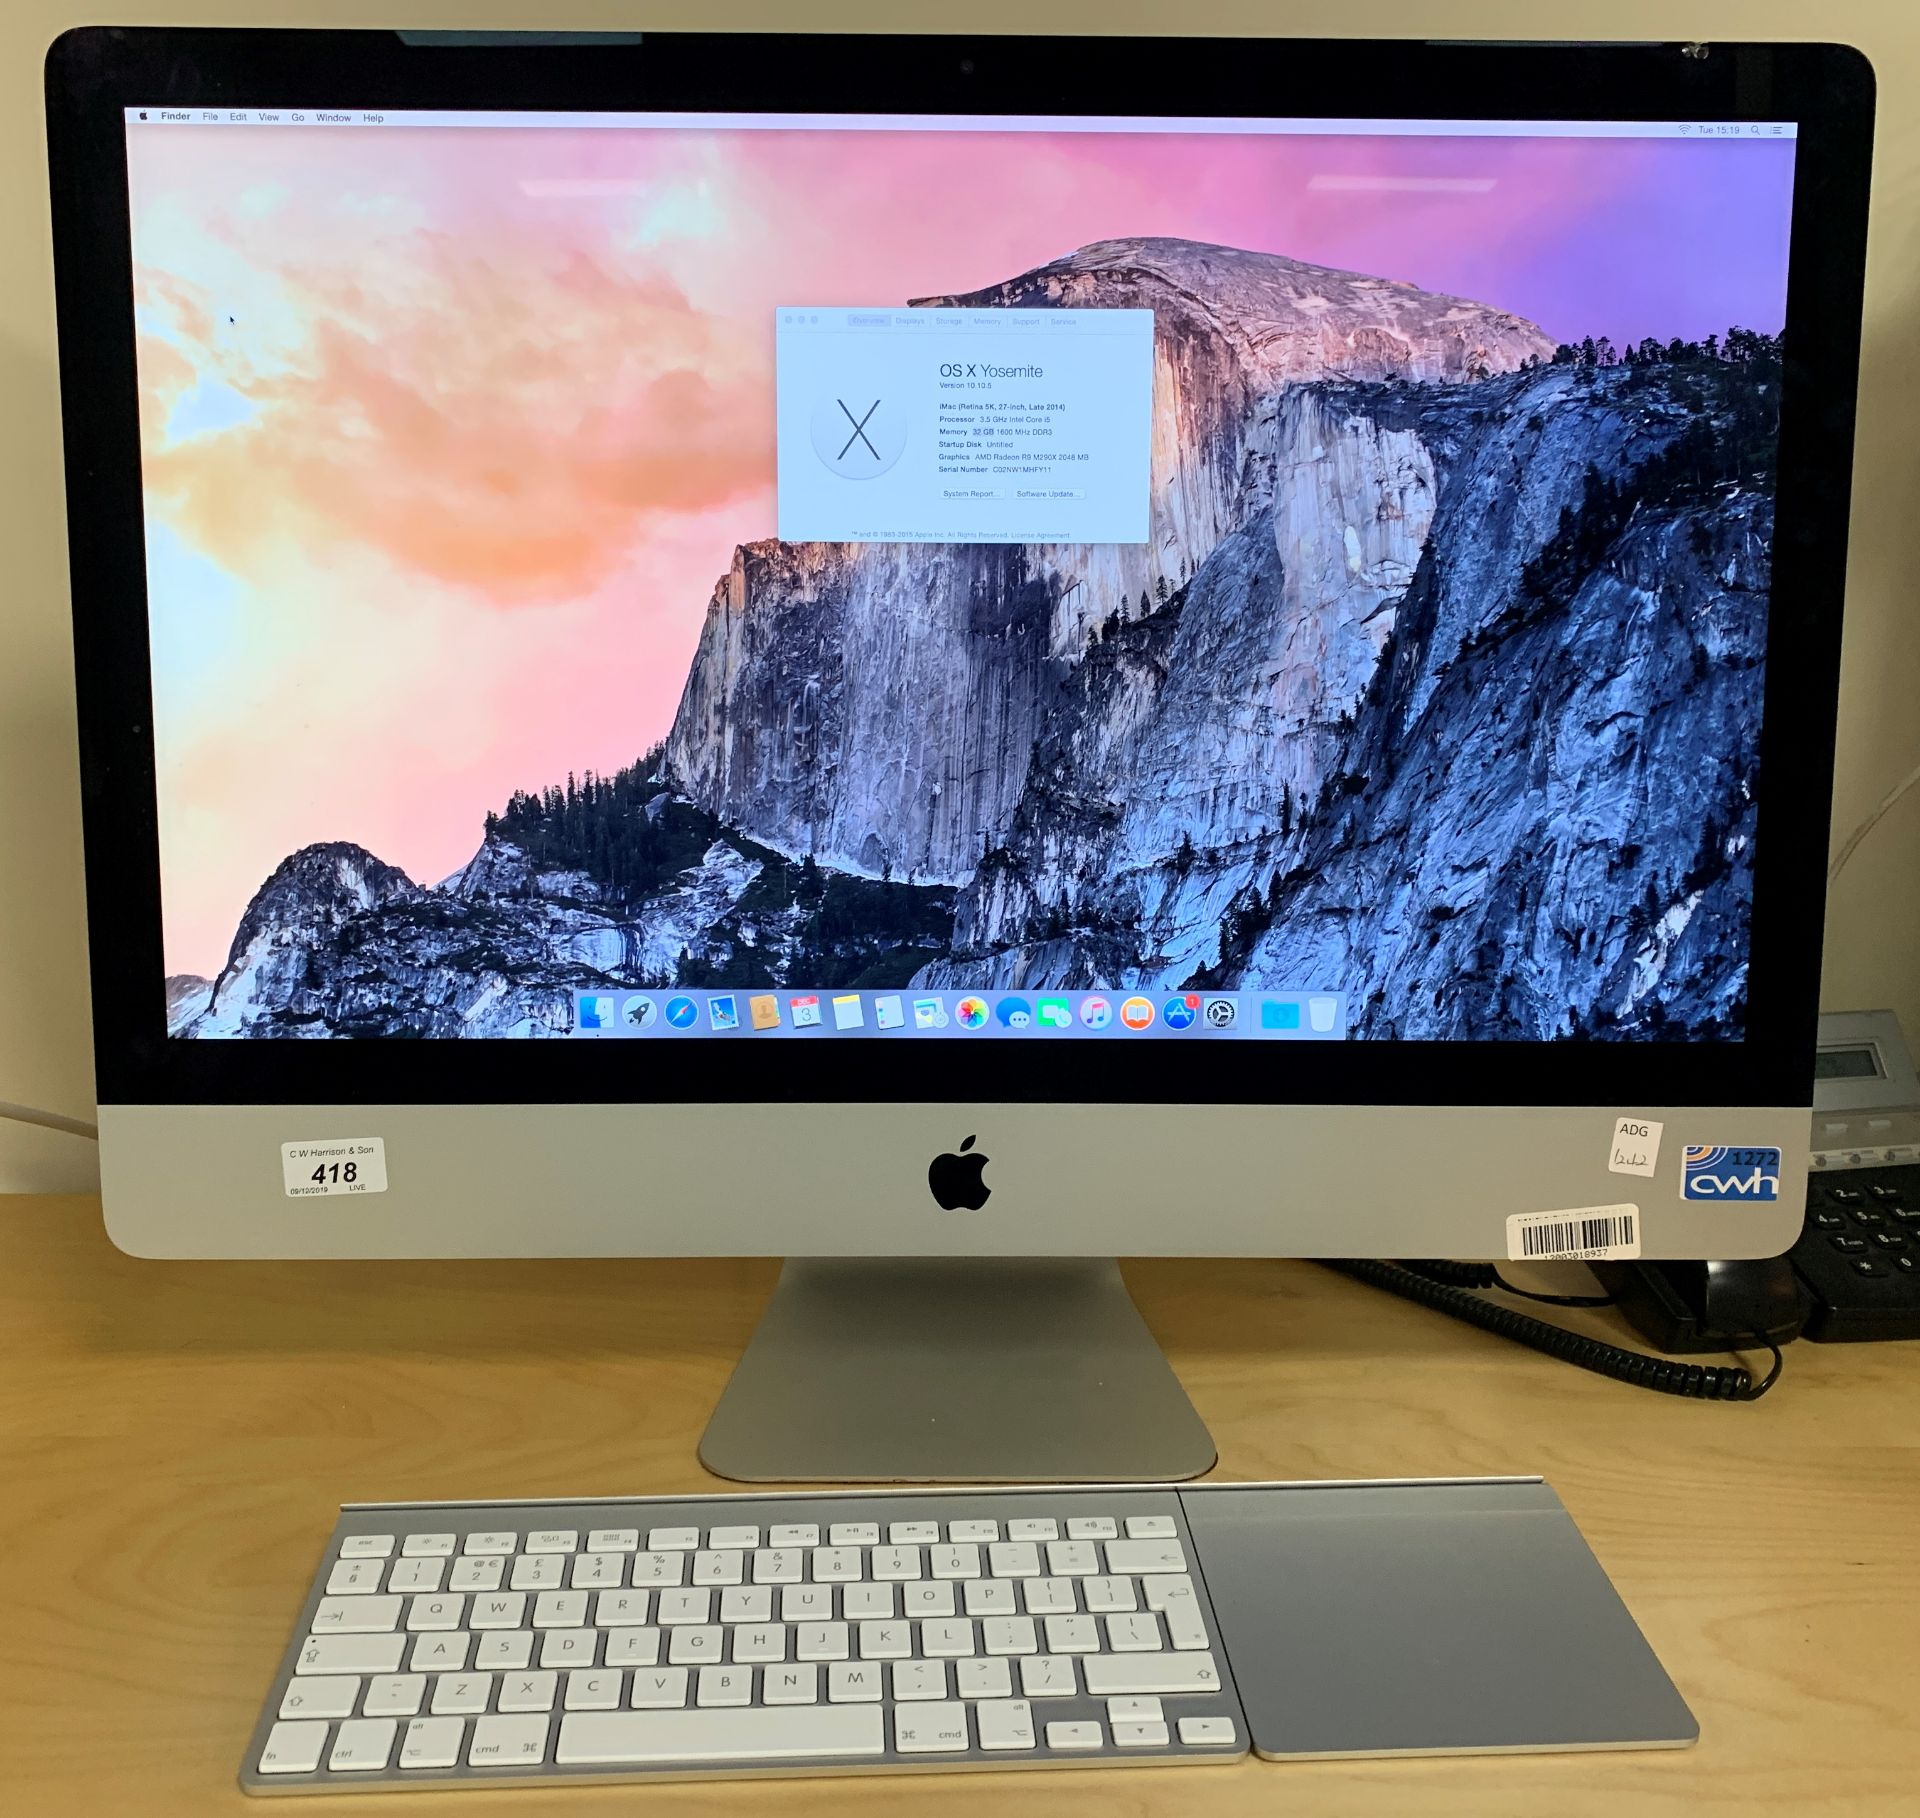 Apple iMac model EMC2806, serial no.